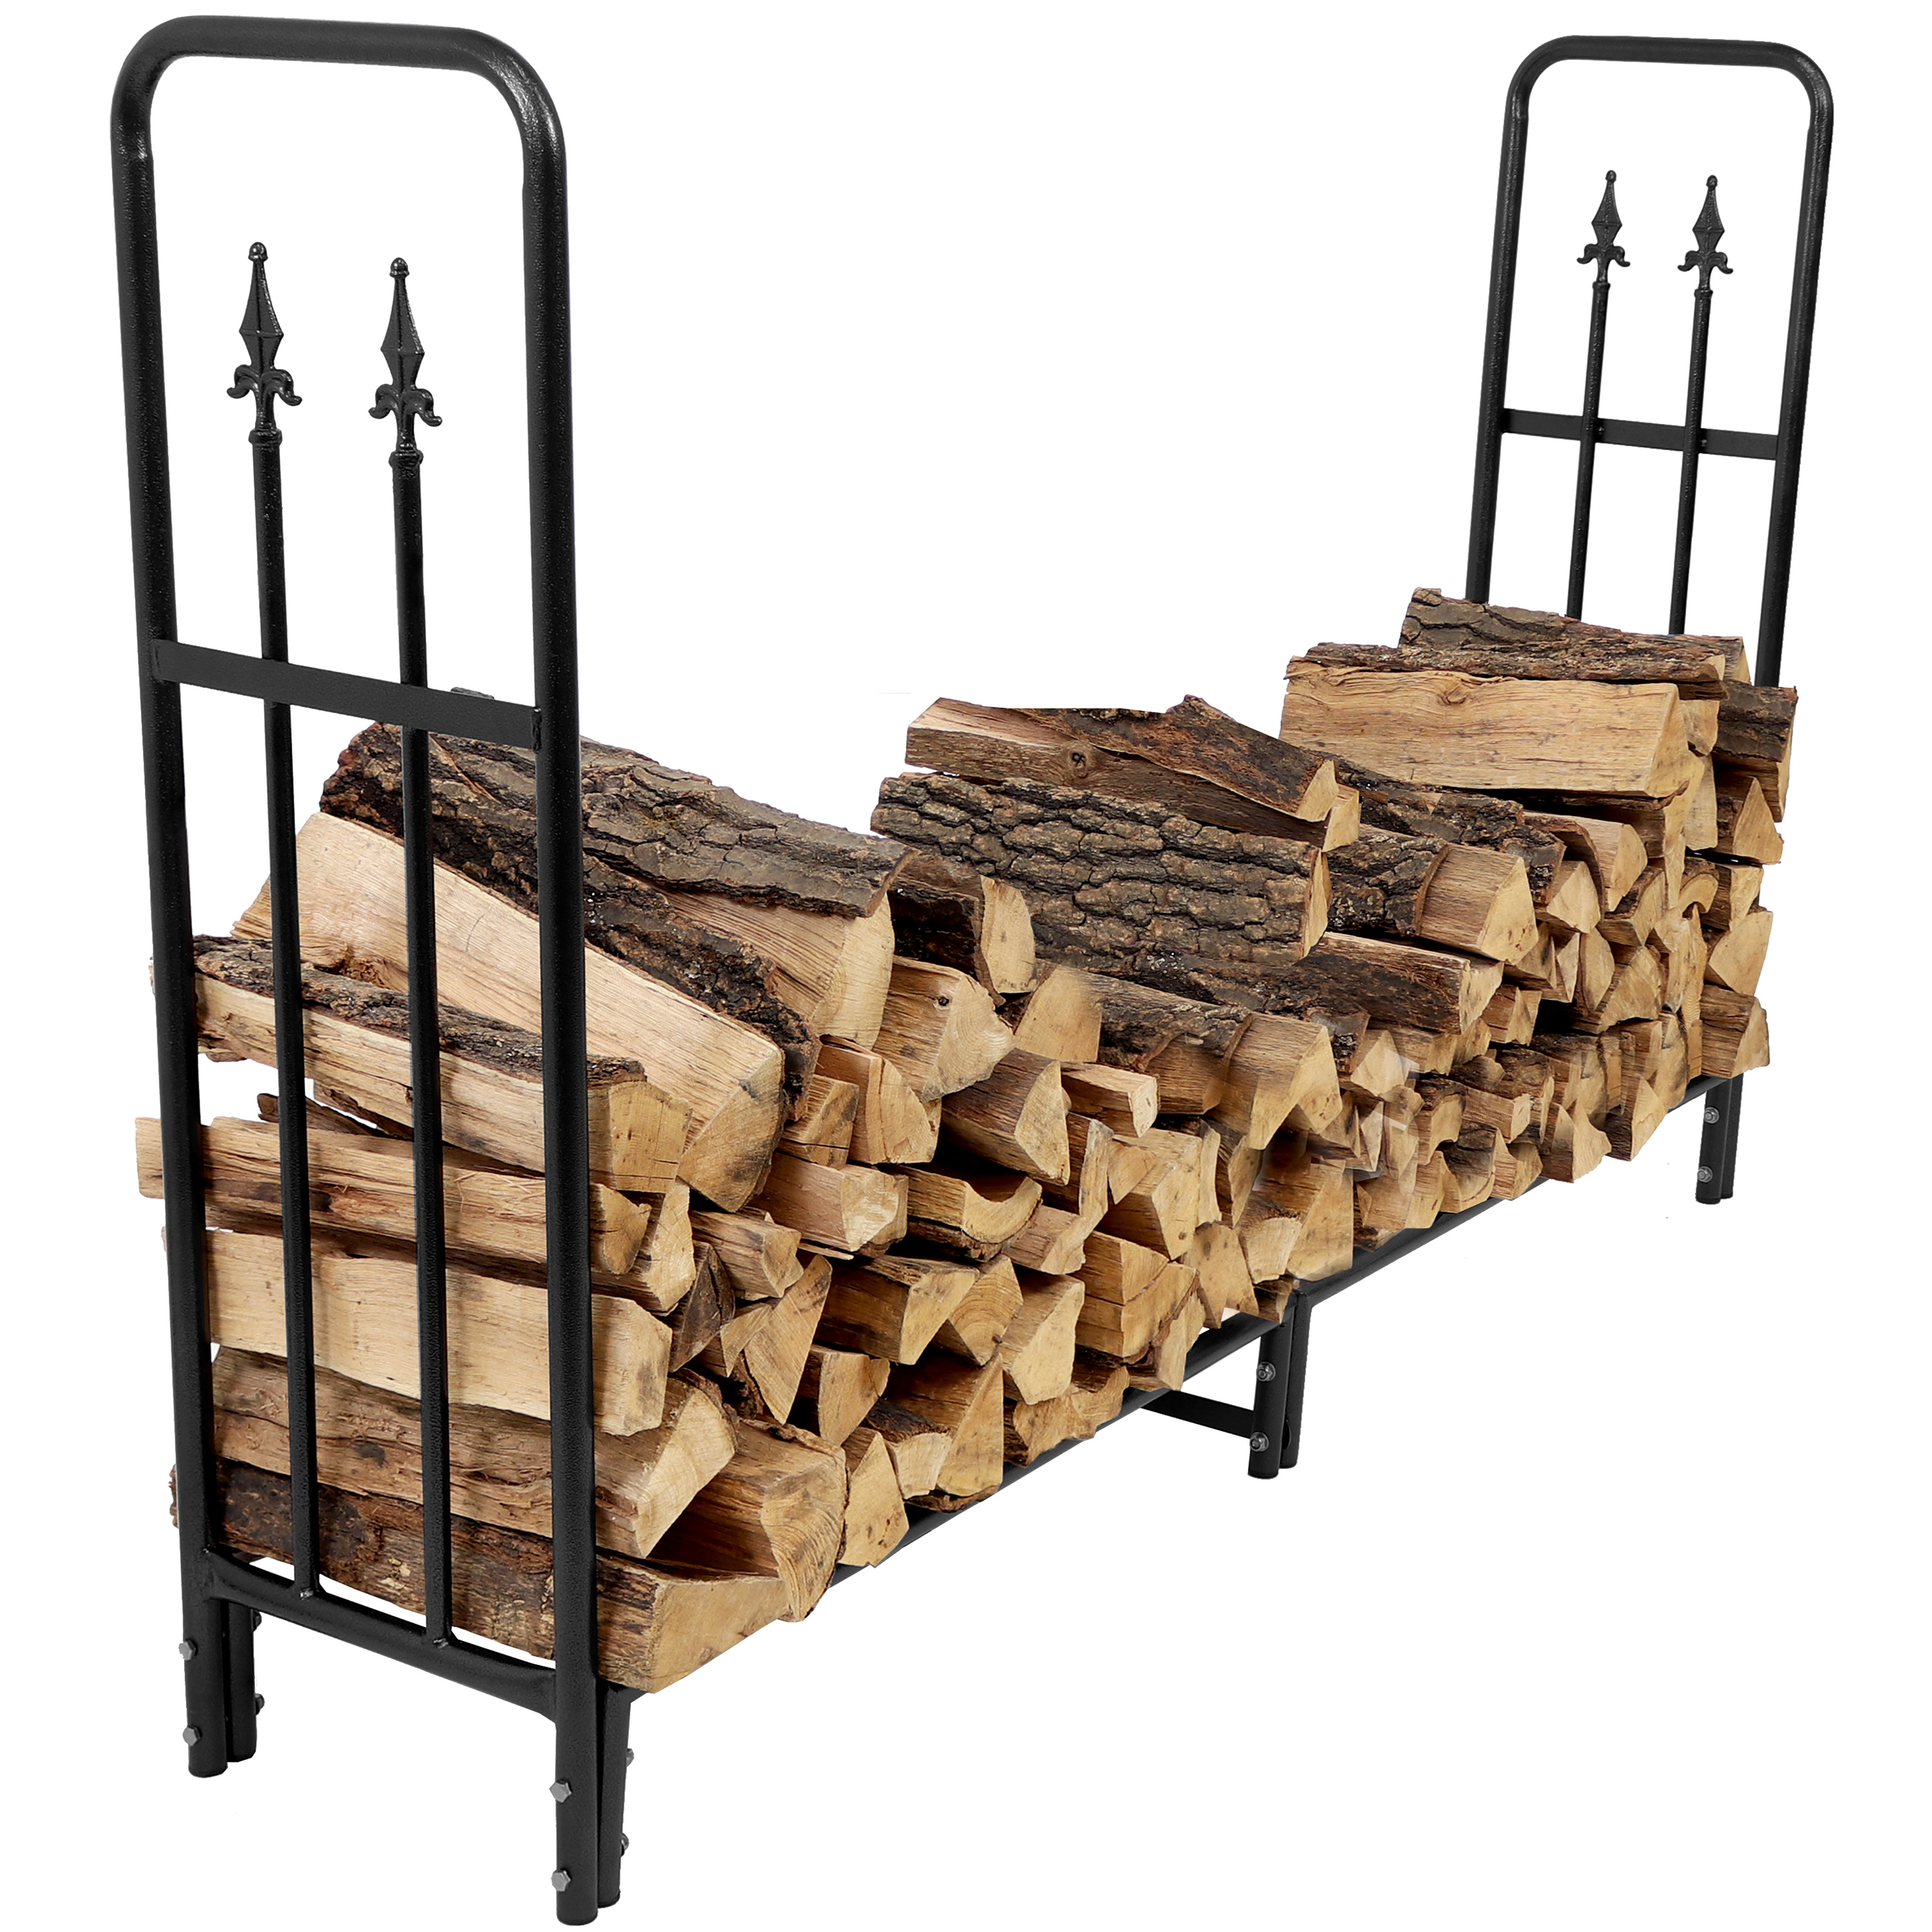 Sunnydaze Decorative Firewood Log Rack, 6 Foot, Log Rack ONLY